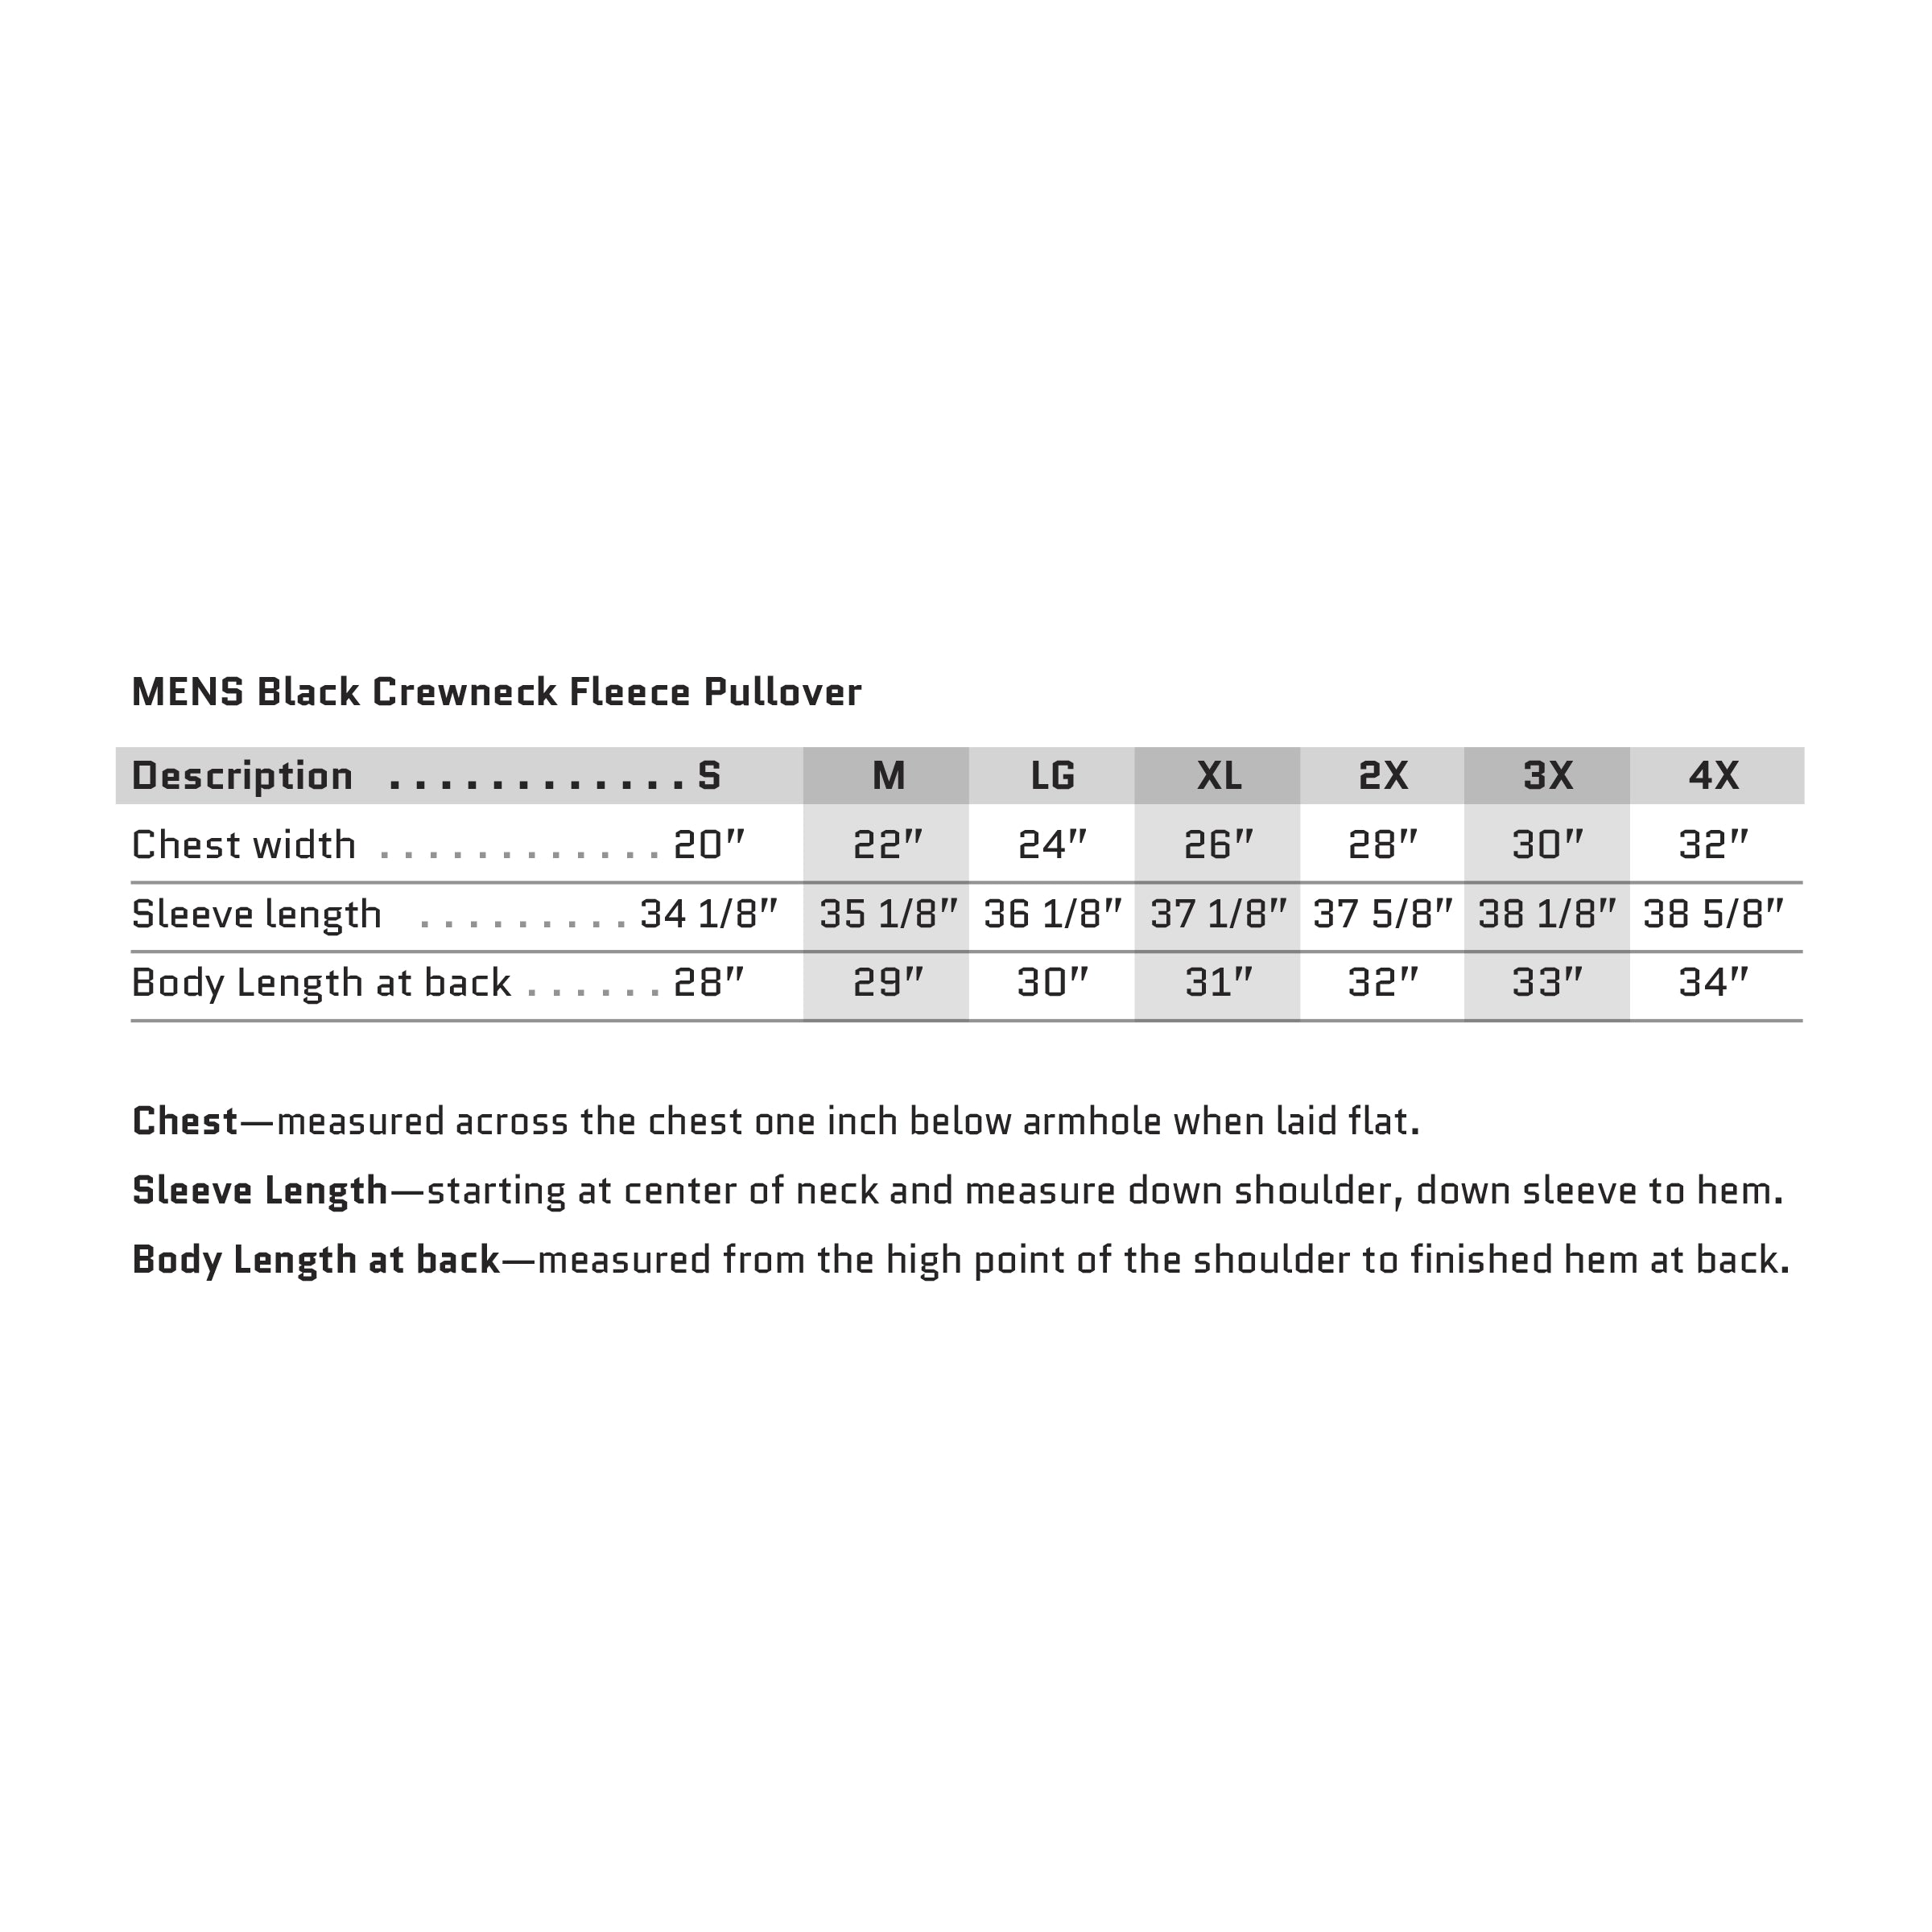 Sizing chart for the Men's Black Crewneck Fleece Pullover, per manufacturer's specs. Sizes SM - 4X.